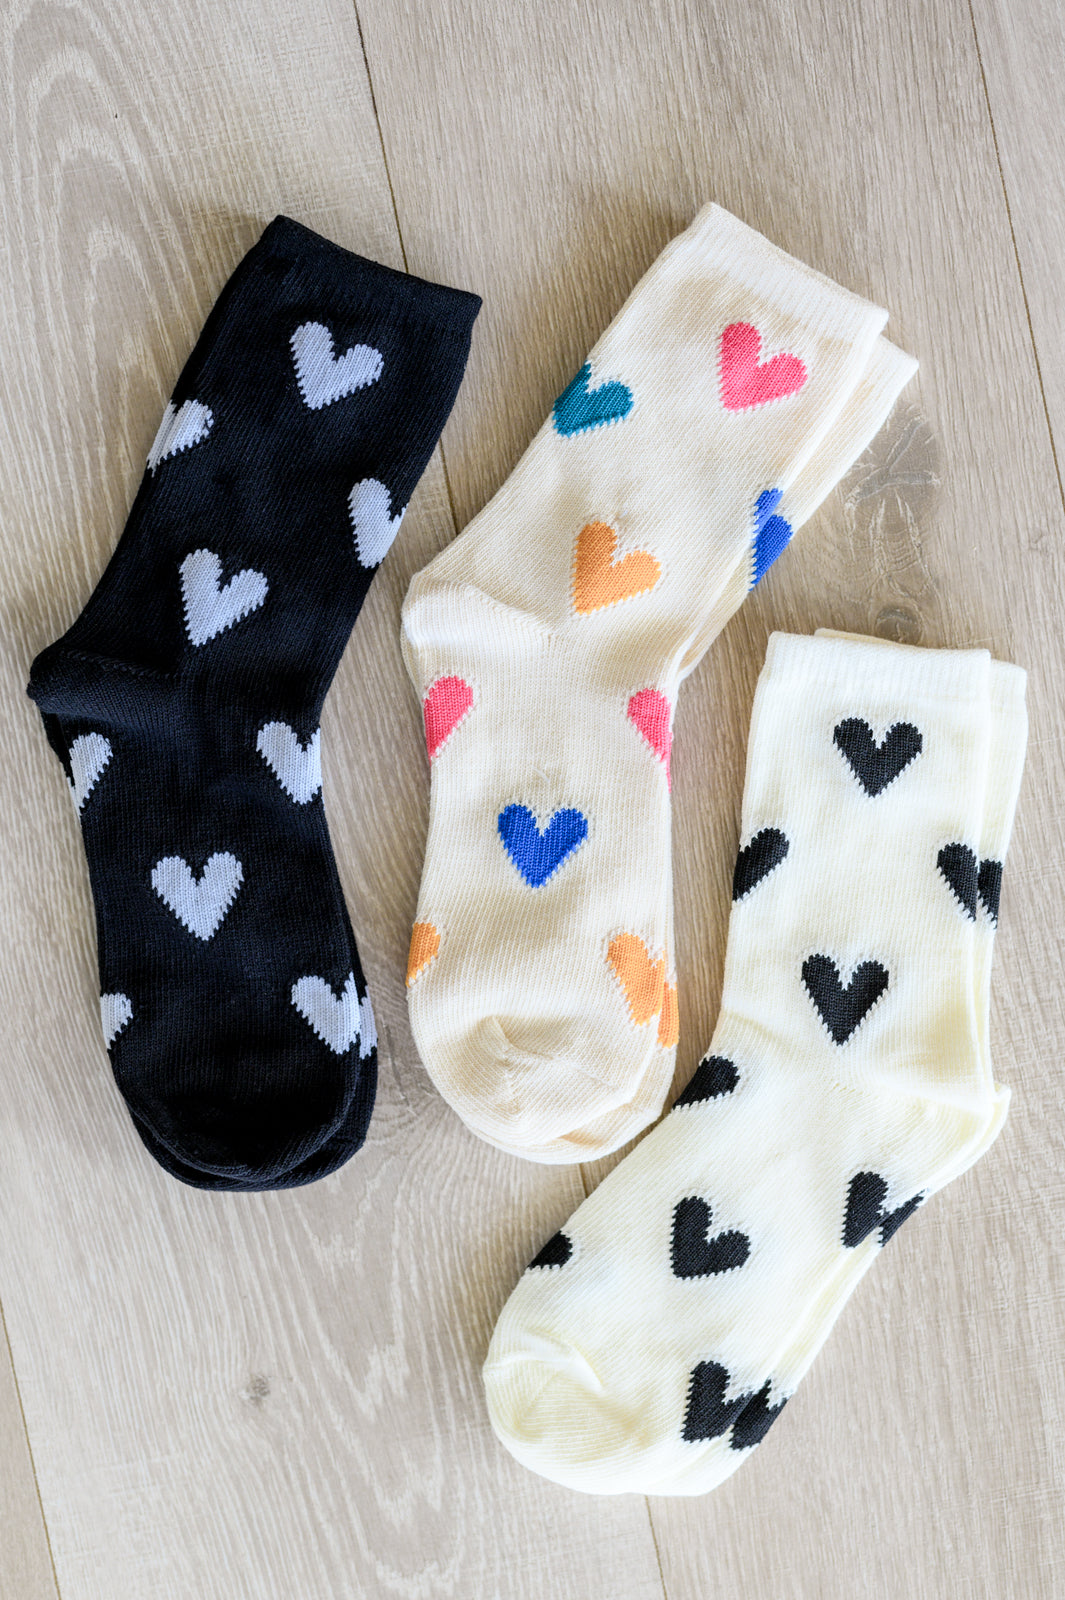 Woven Hearts Everyday Socks Set of 3-Womens-OS-jsbecigarette Shop for Women & Kids